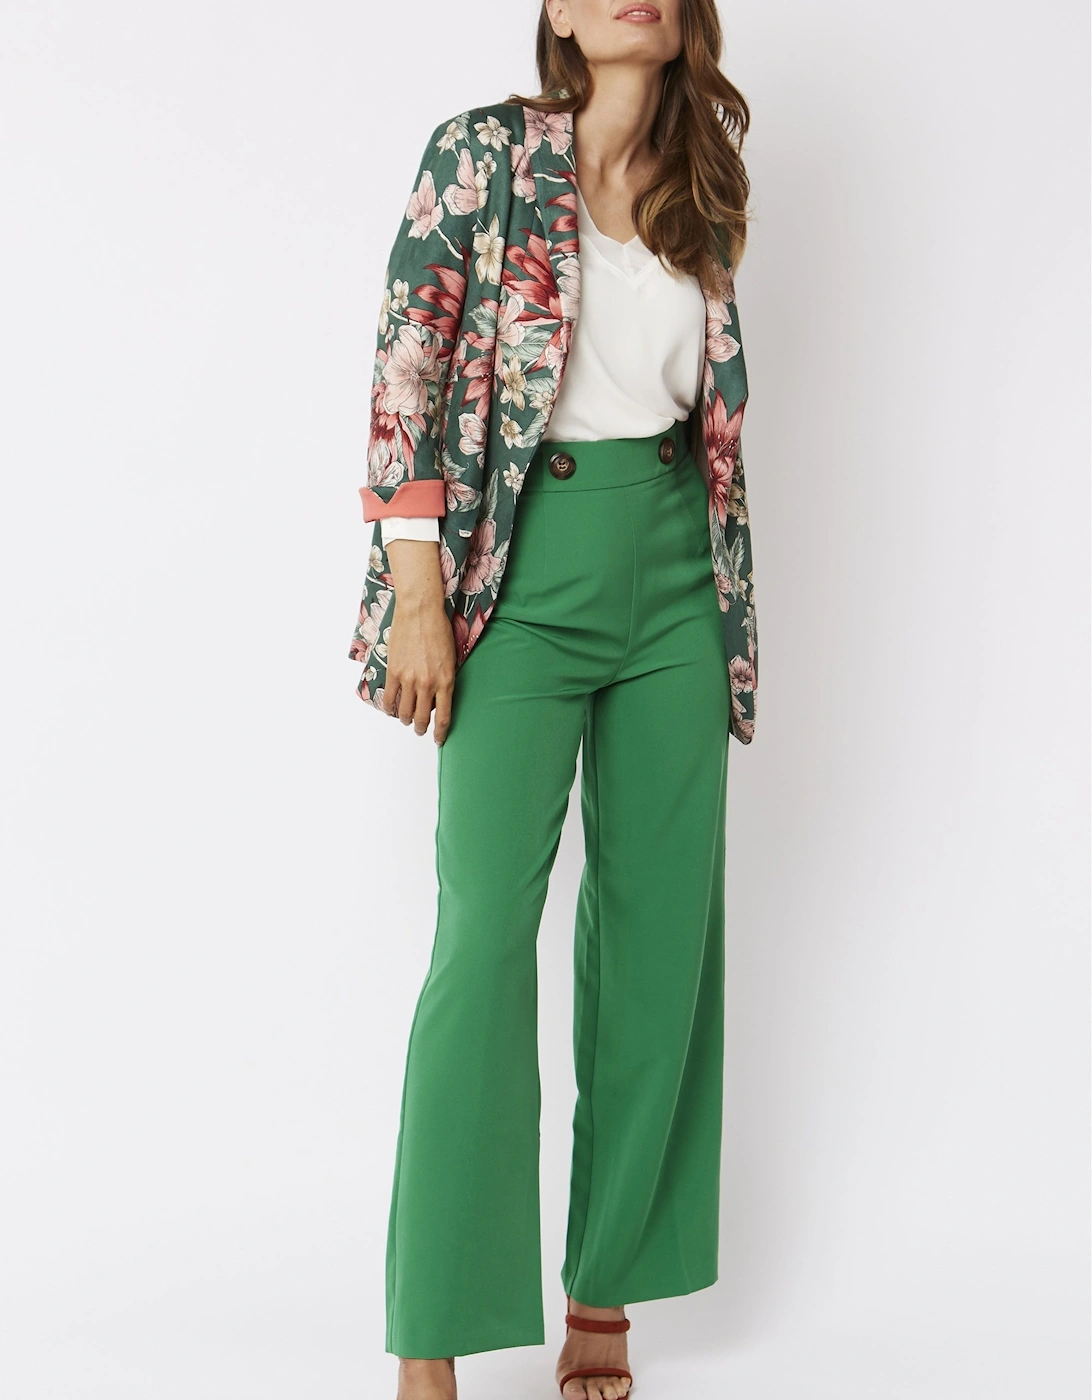 Green Faux Suede Floral Print Blazer Jacket